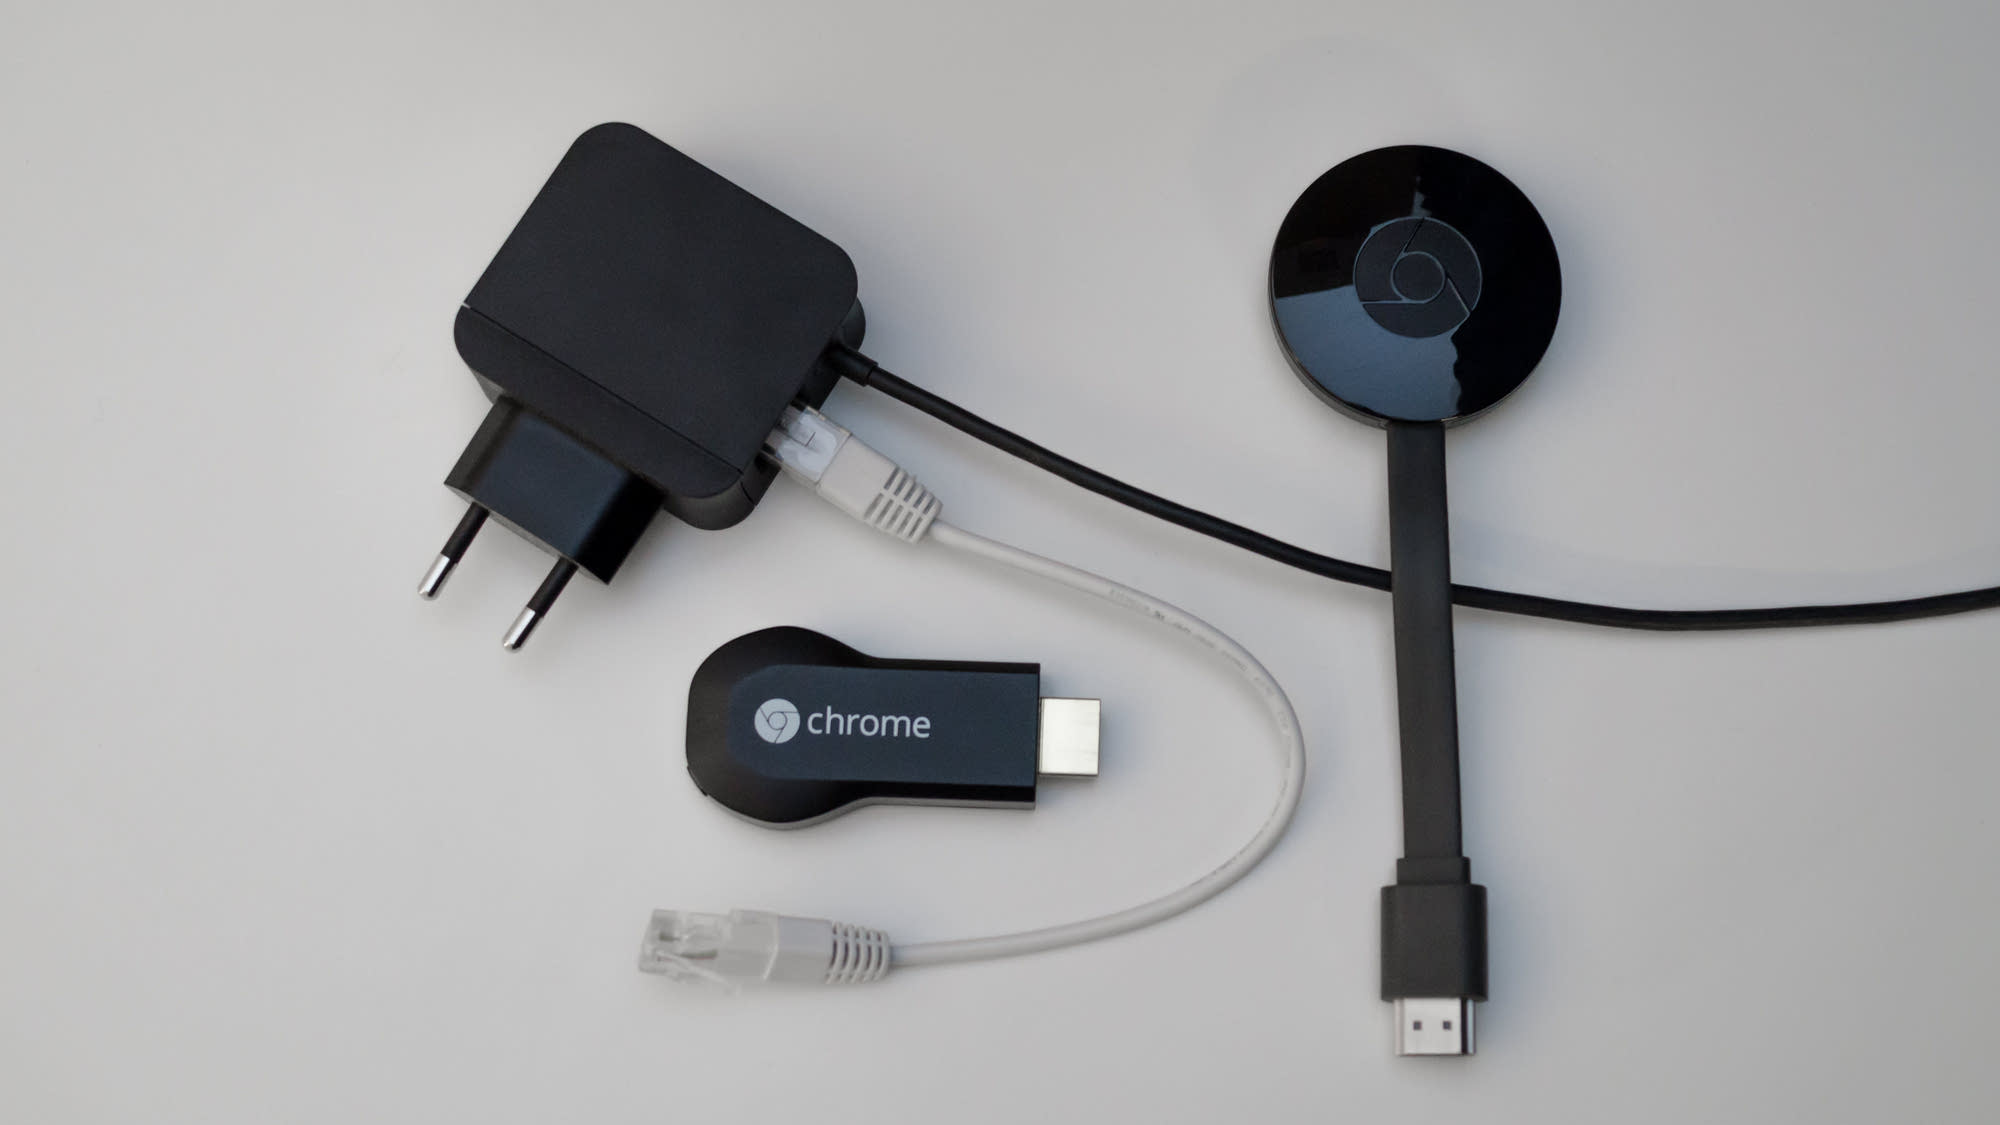 Review of the Ethernet for Chromecast | Ctrl blog